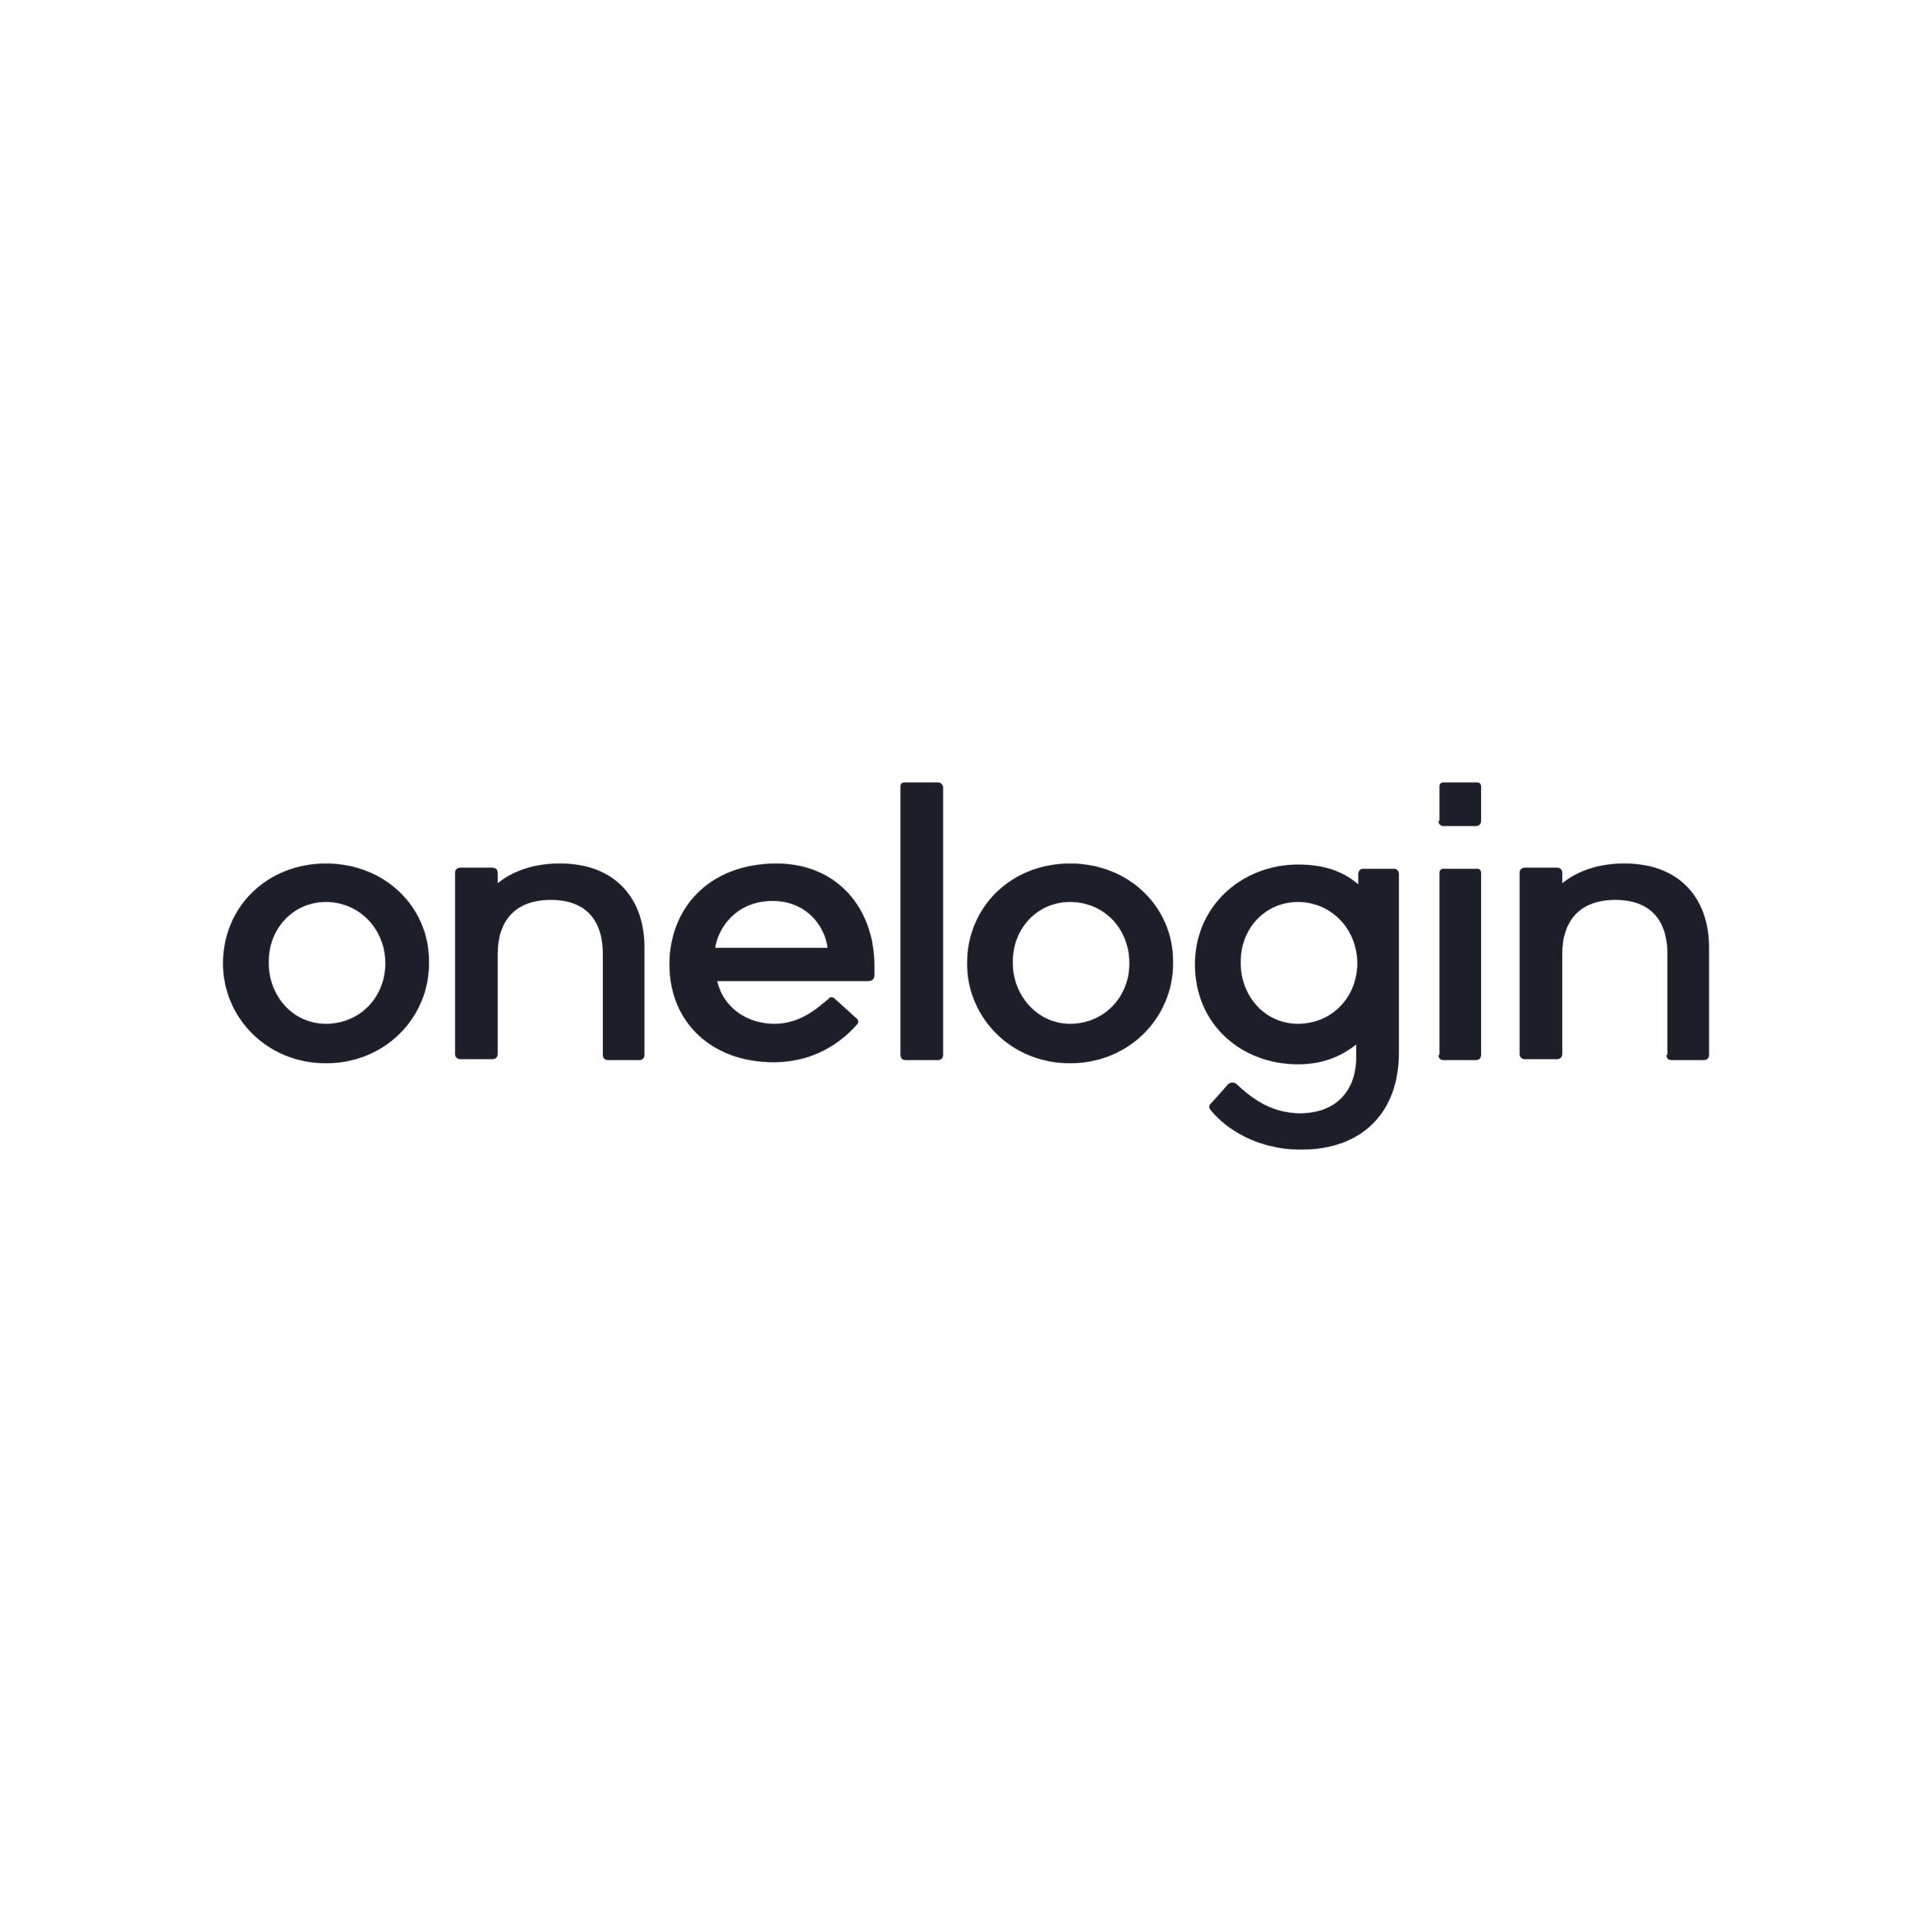 OneLogin Stock